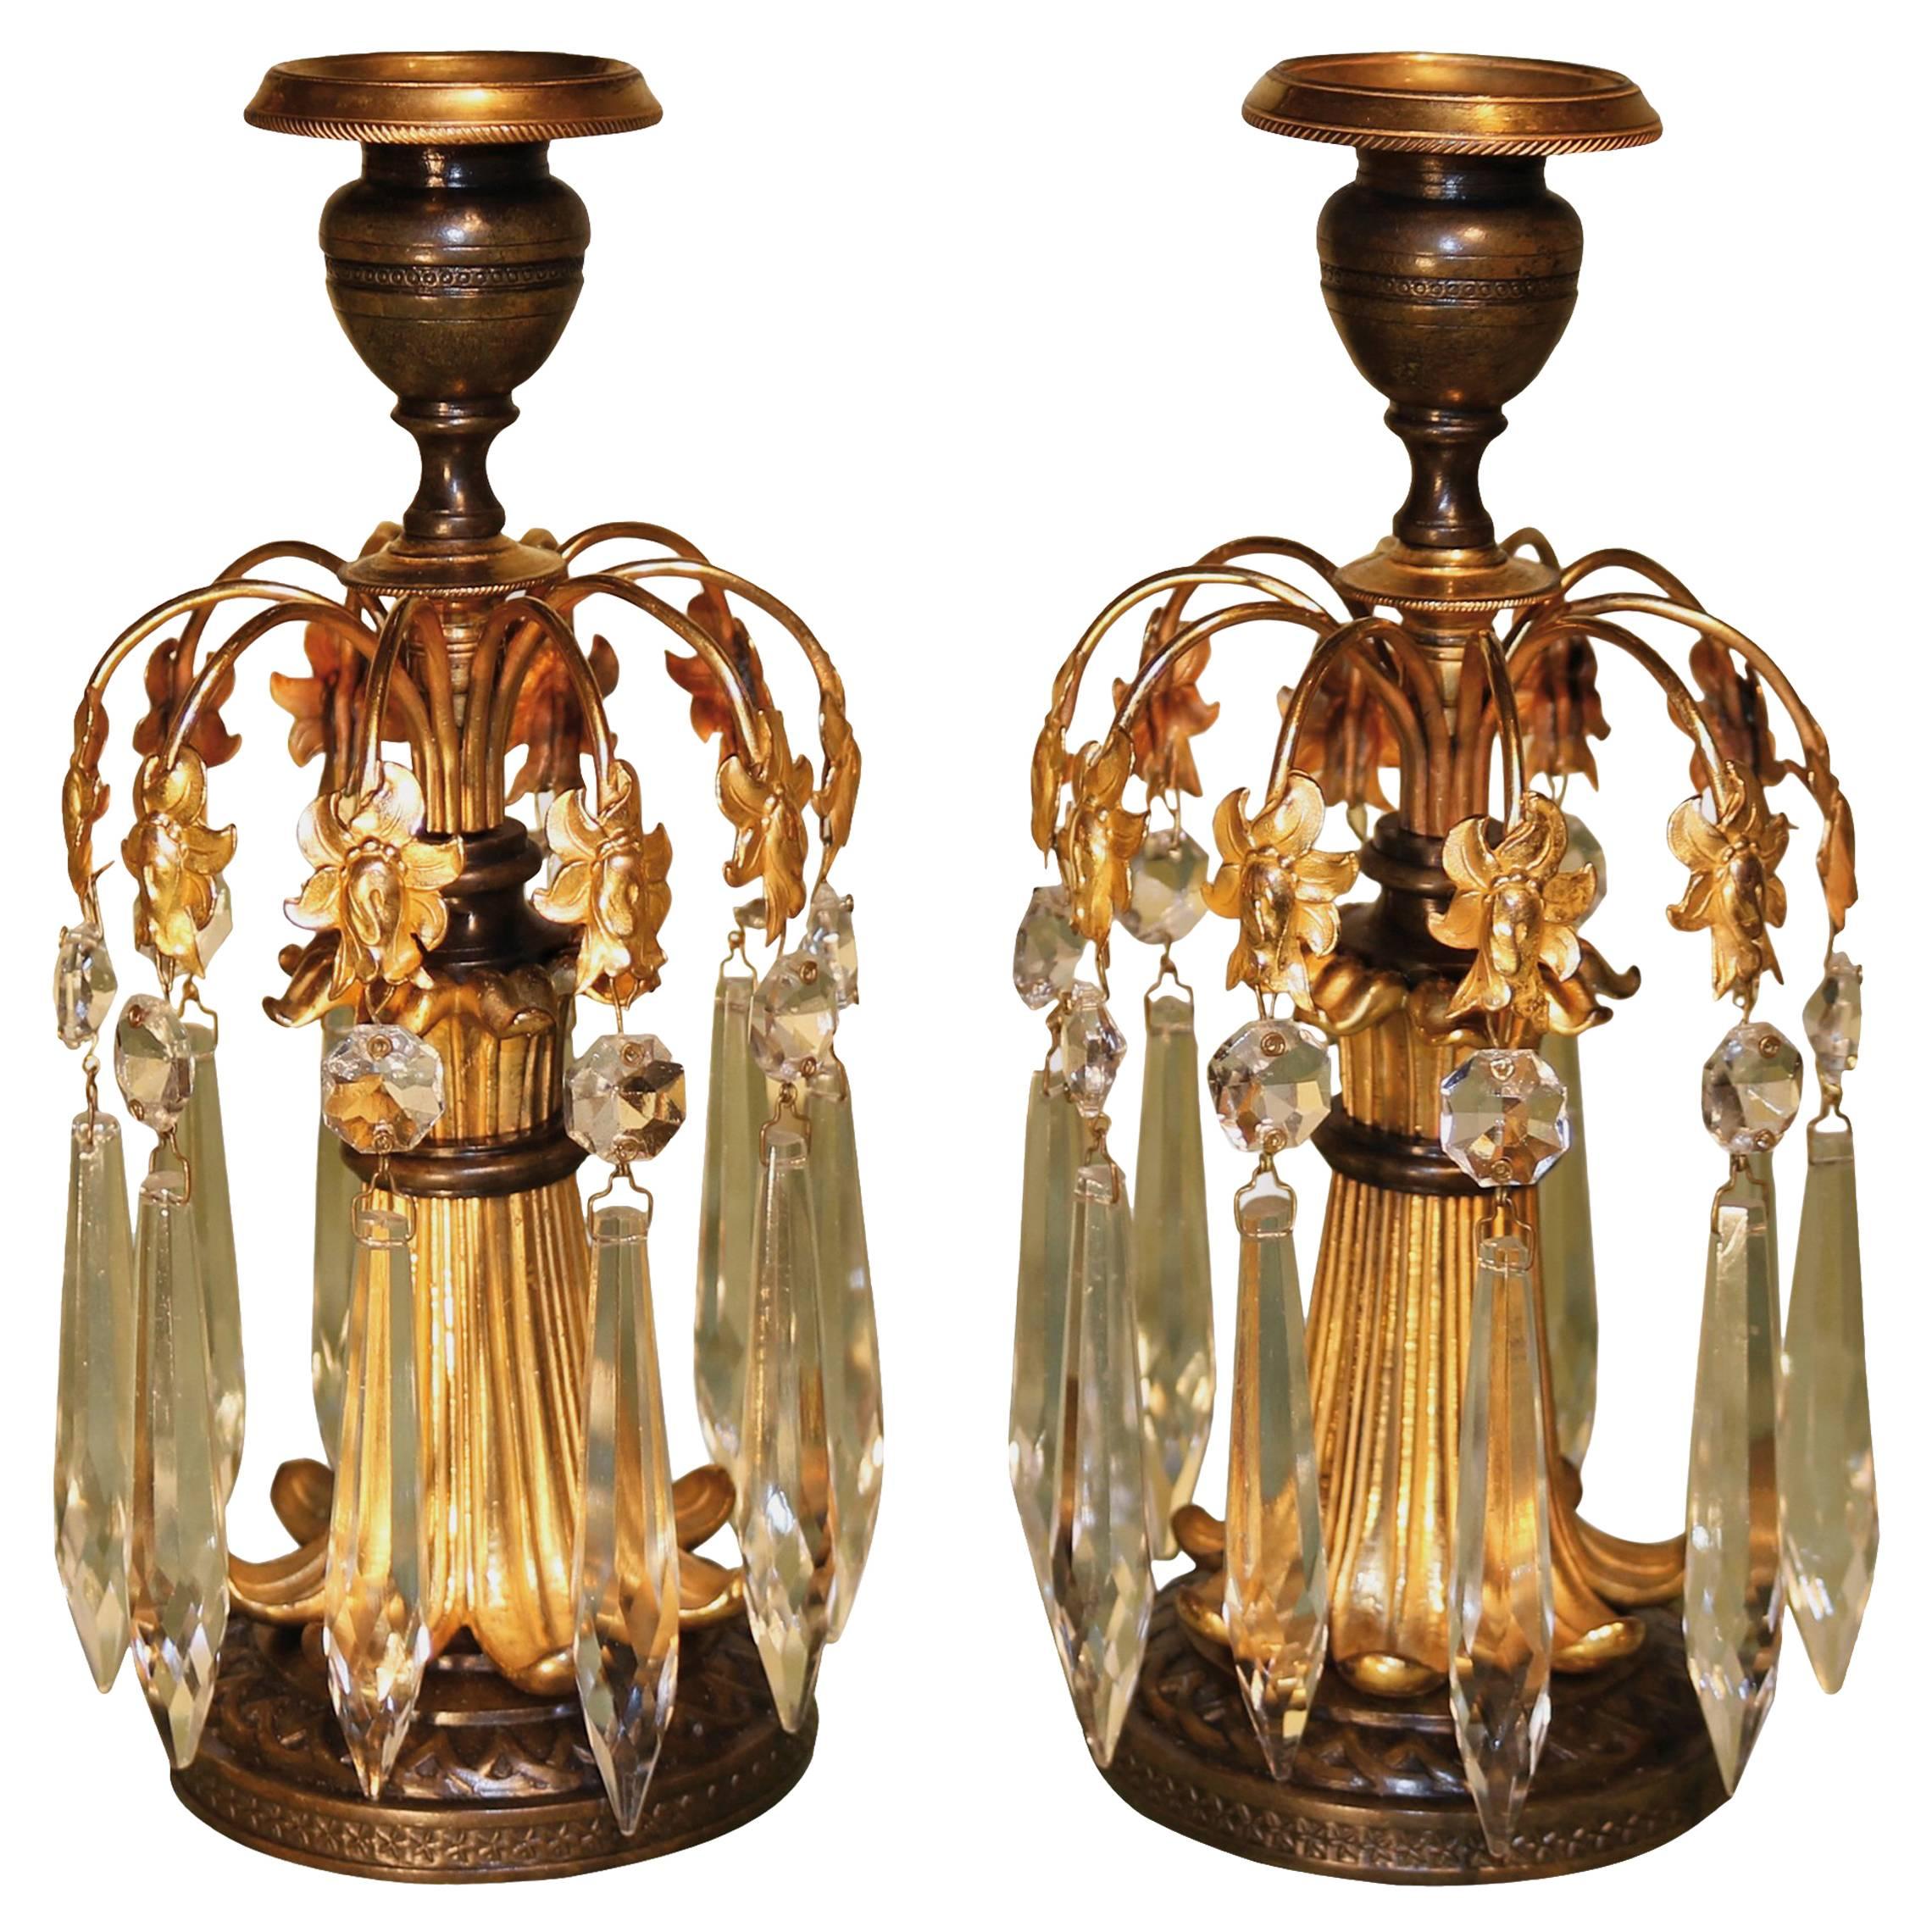 19th Century bronze and ormolu lustre candlesticks